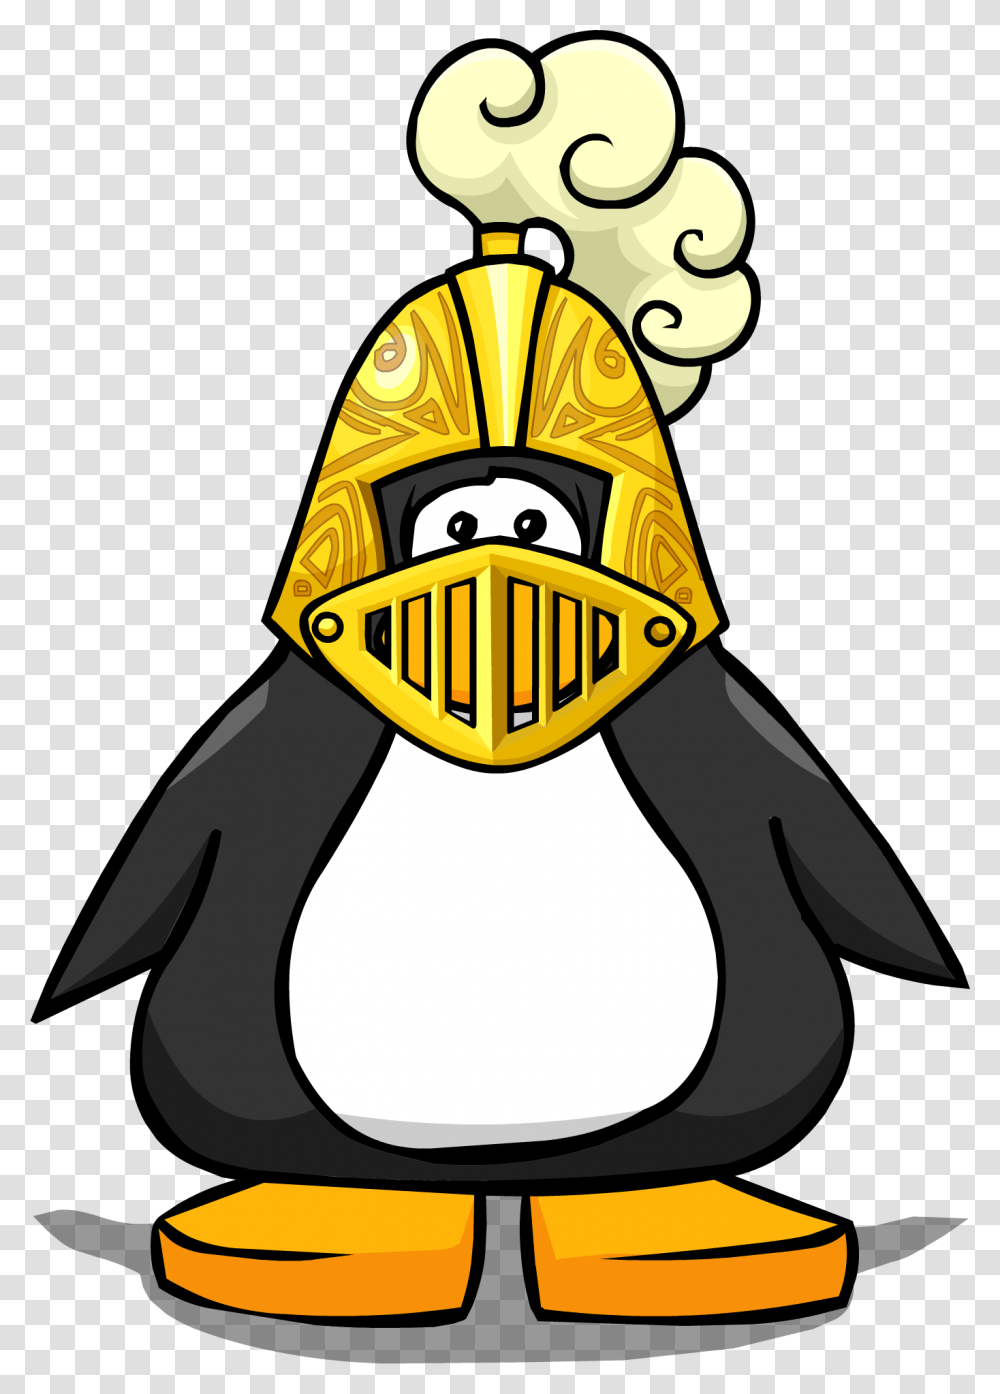 Golden Knight's Helmet Pc Club Penguin With Headphones, Bird, Animal, King Penguin Transparent Png